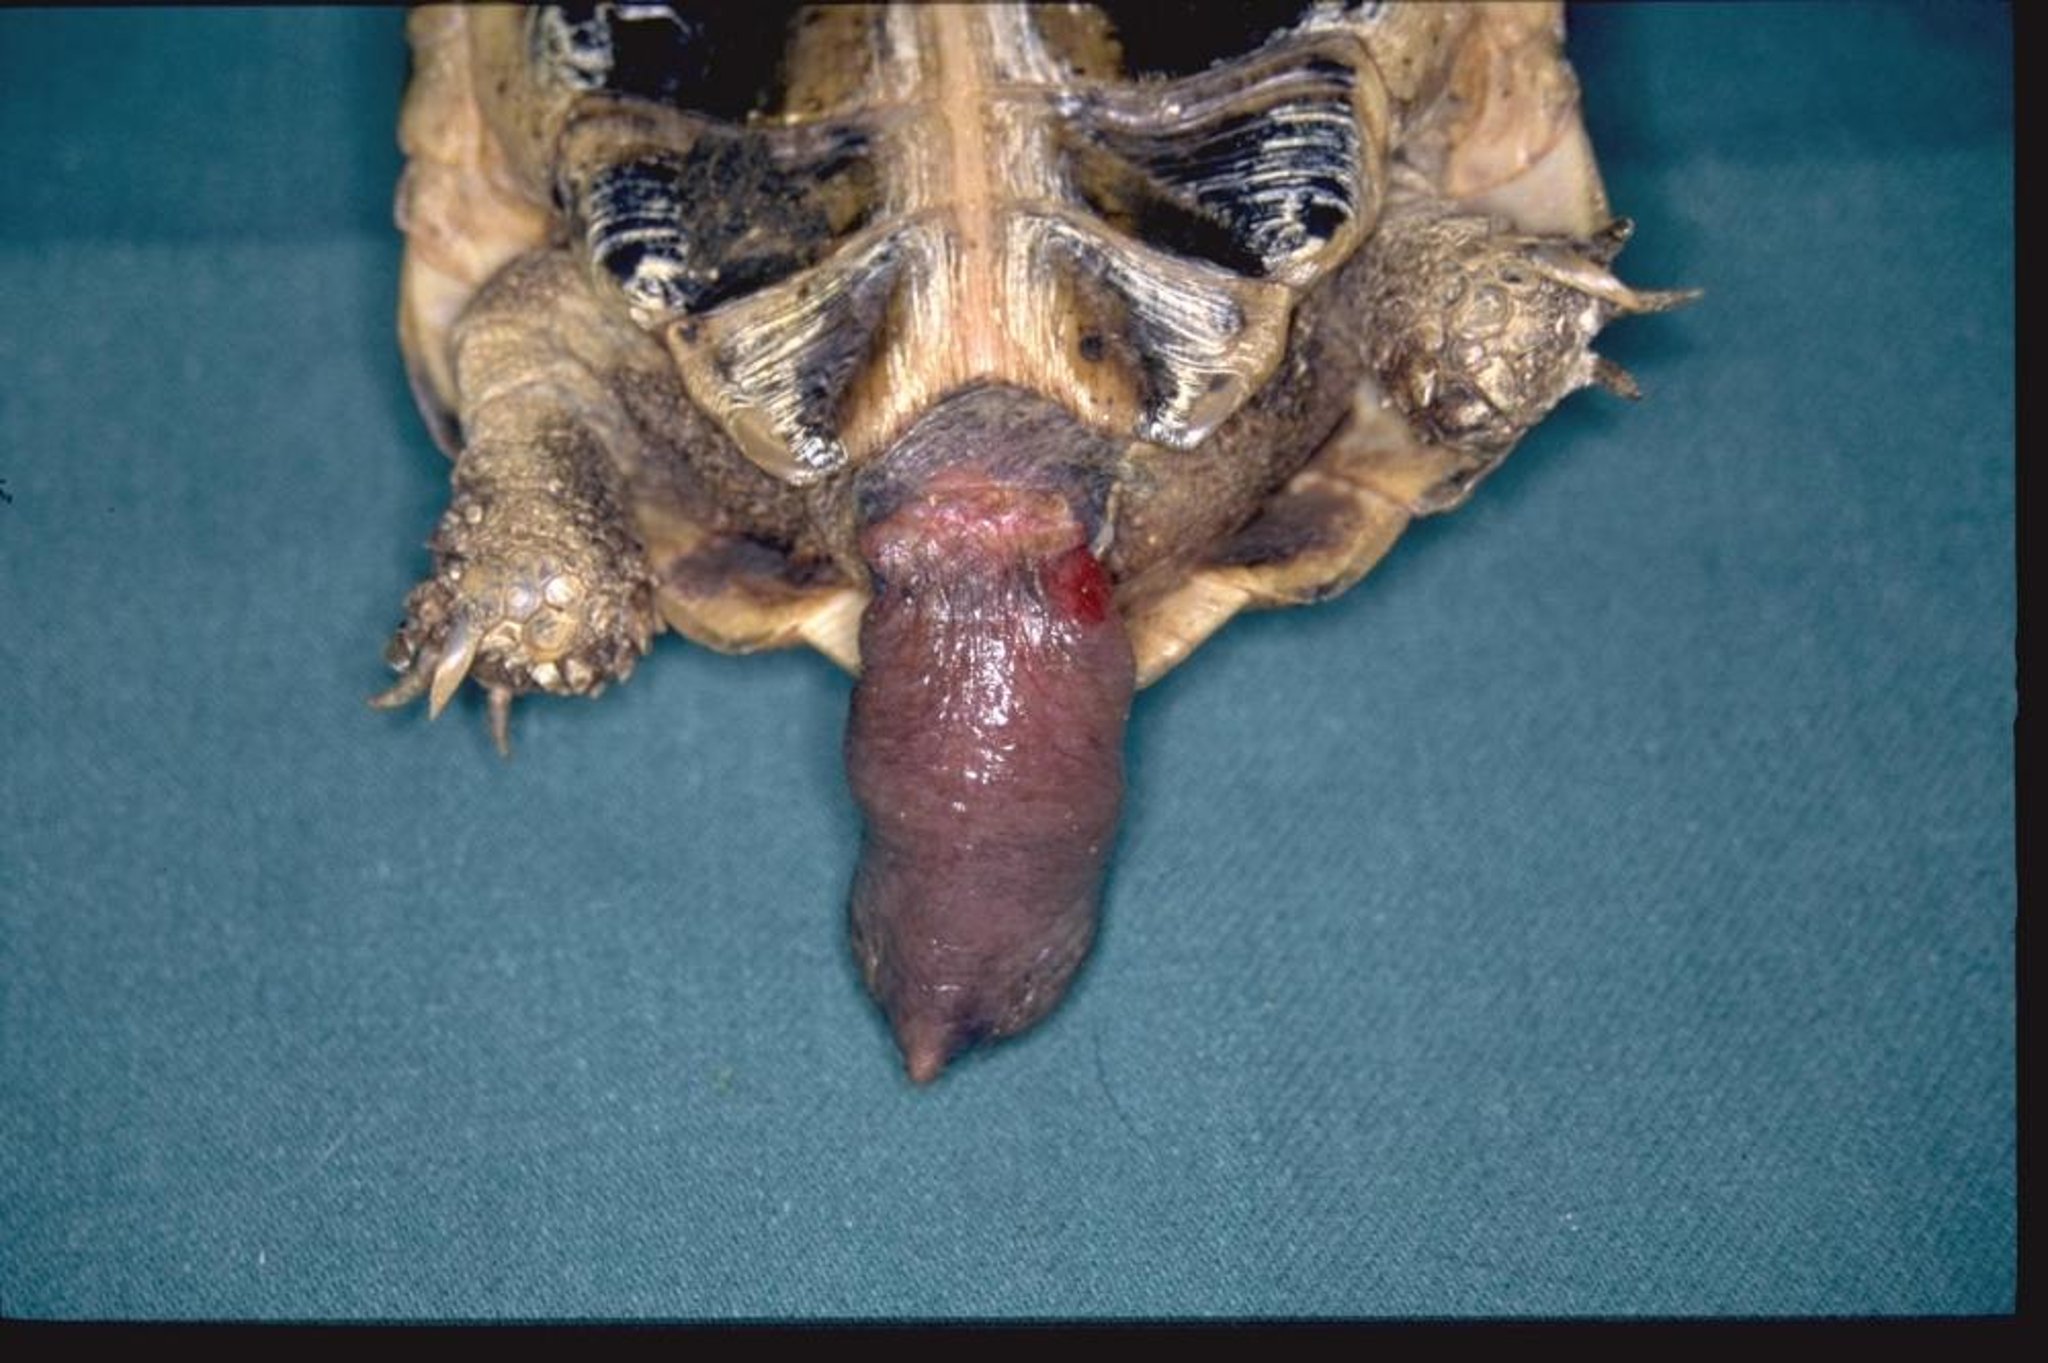 Prolapsed phallus, tortoise